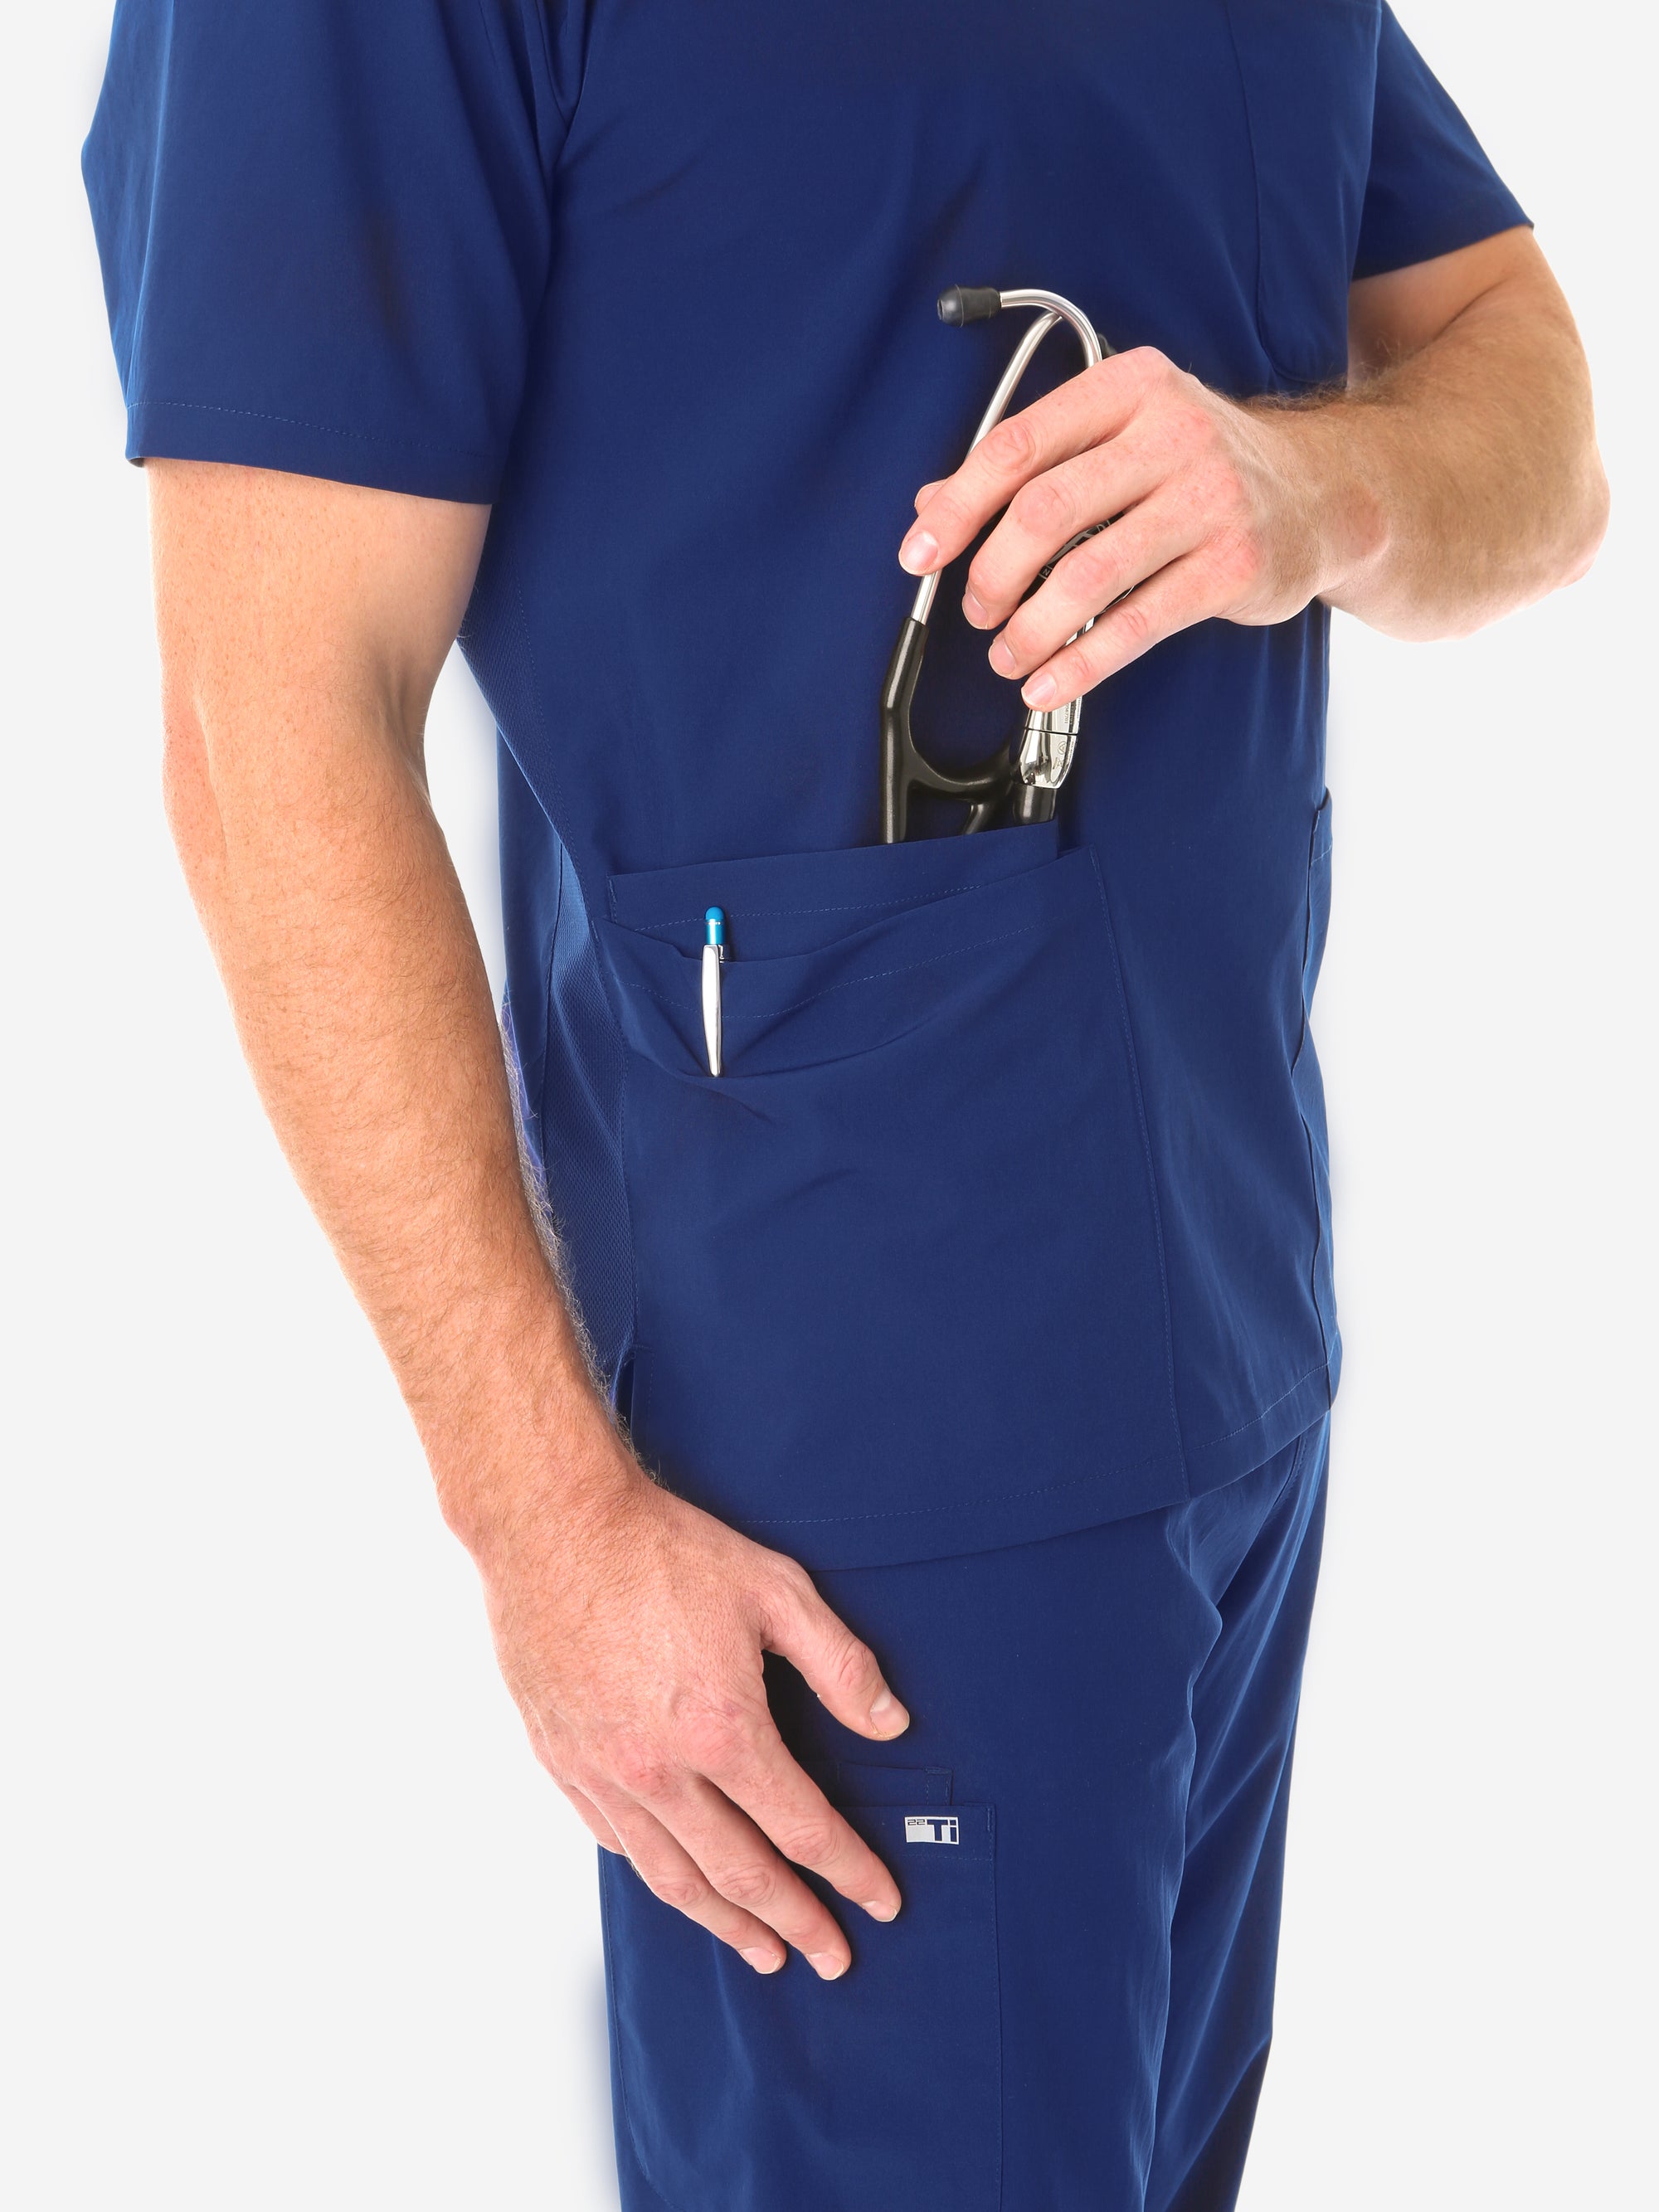 Men&#39;s Five-Pocket Scrub Top Navy Blue Closeup Lower Pocket with Stethoscope